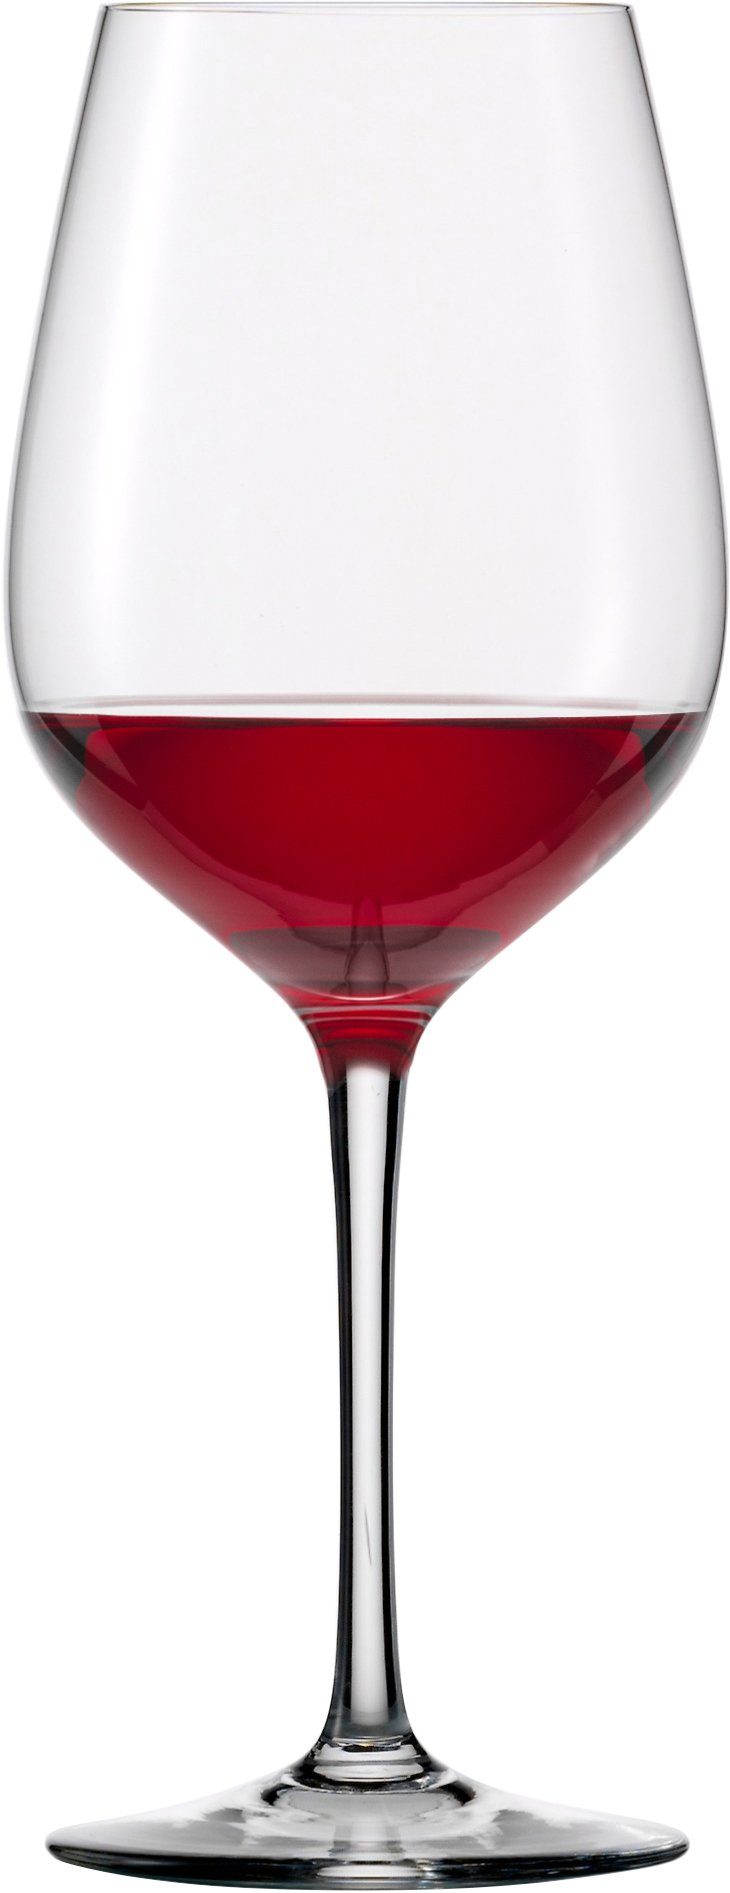 Eisch Rotweinglas Superior SensisPlus, Kristallglas, Bleifrei, 600 ml, 4- teilig